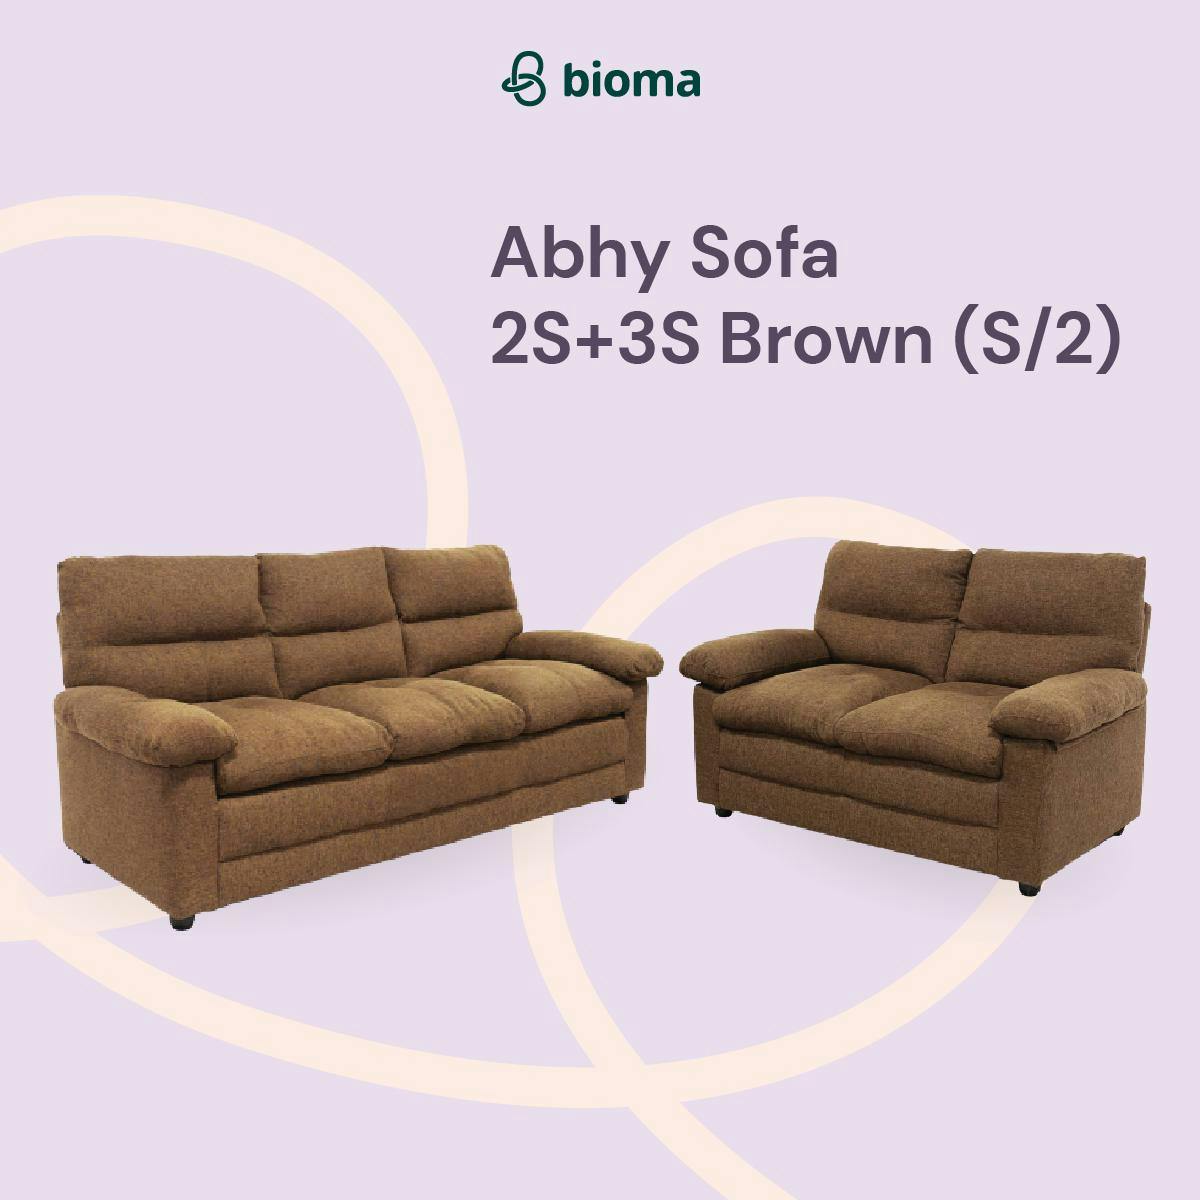 Abhy Sofa